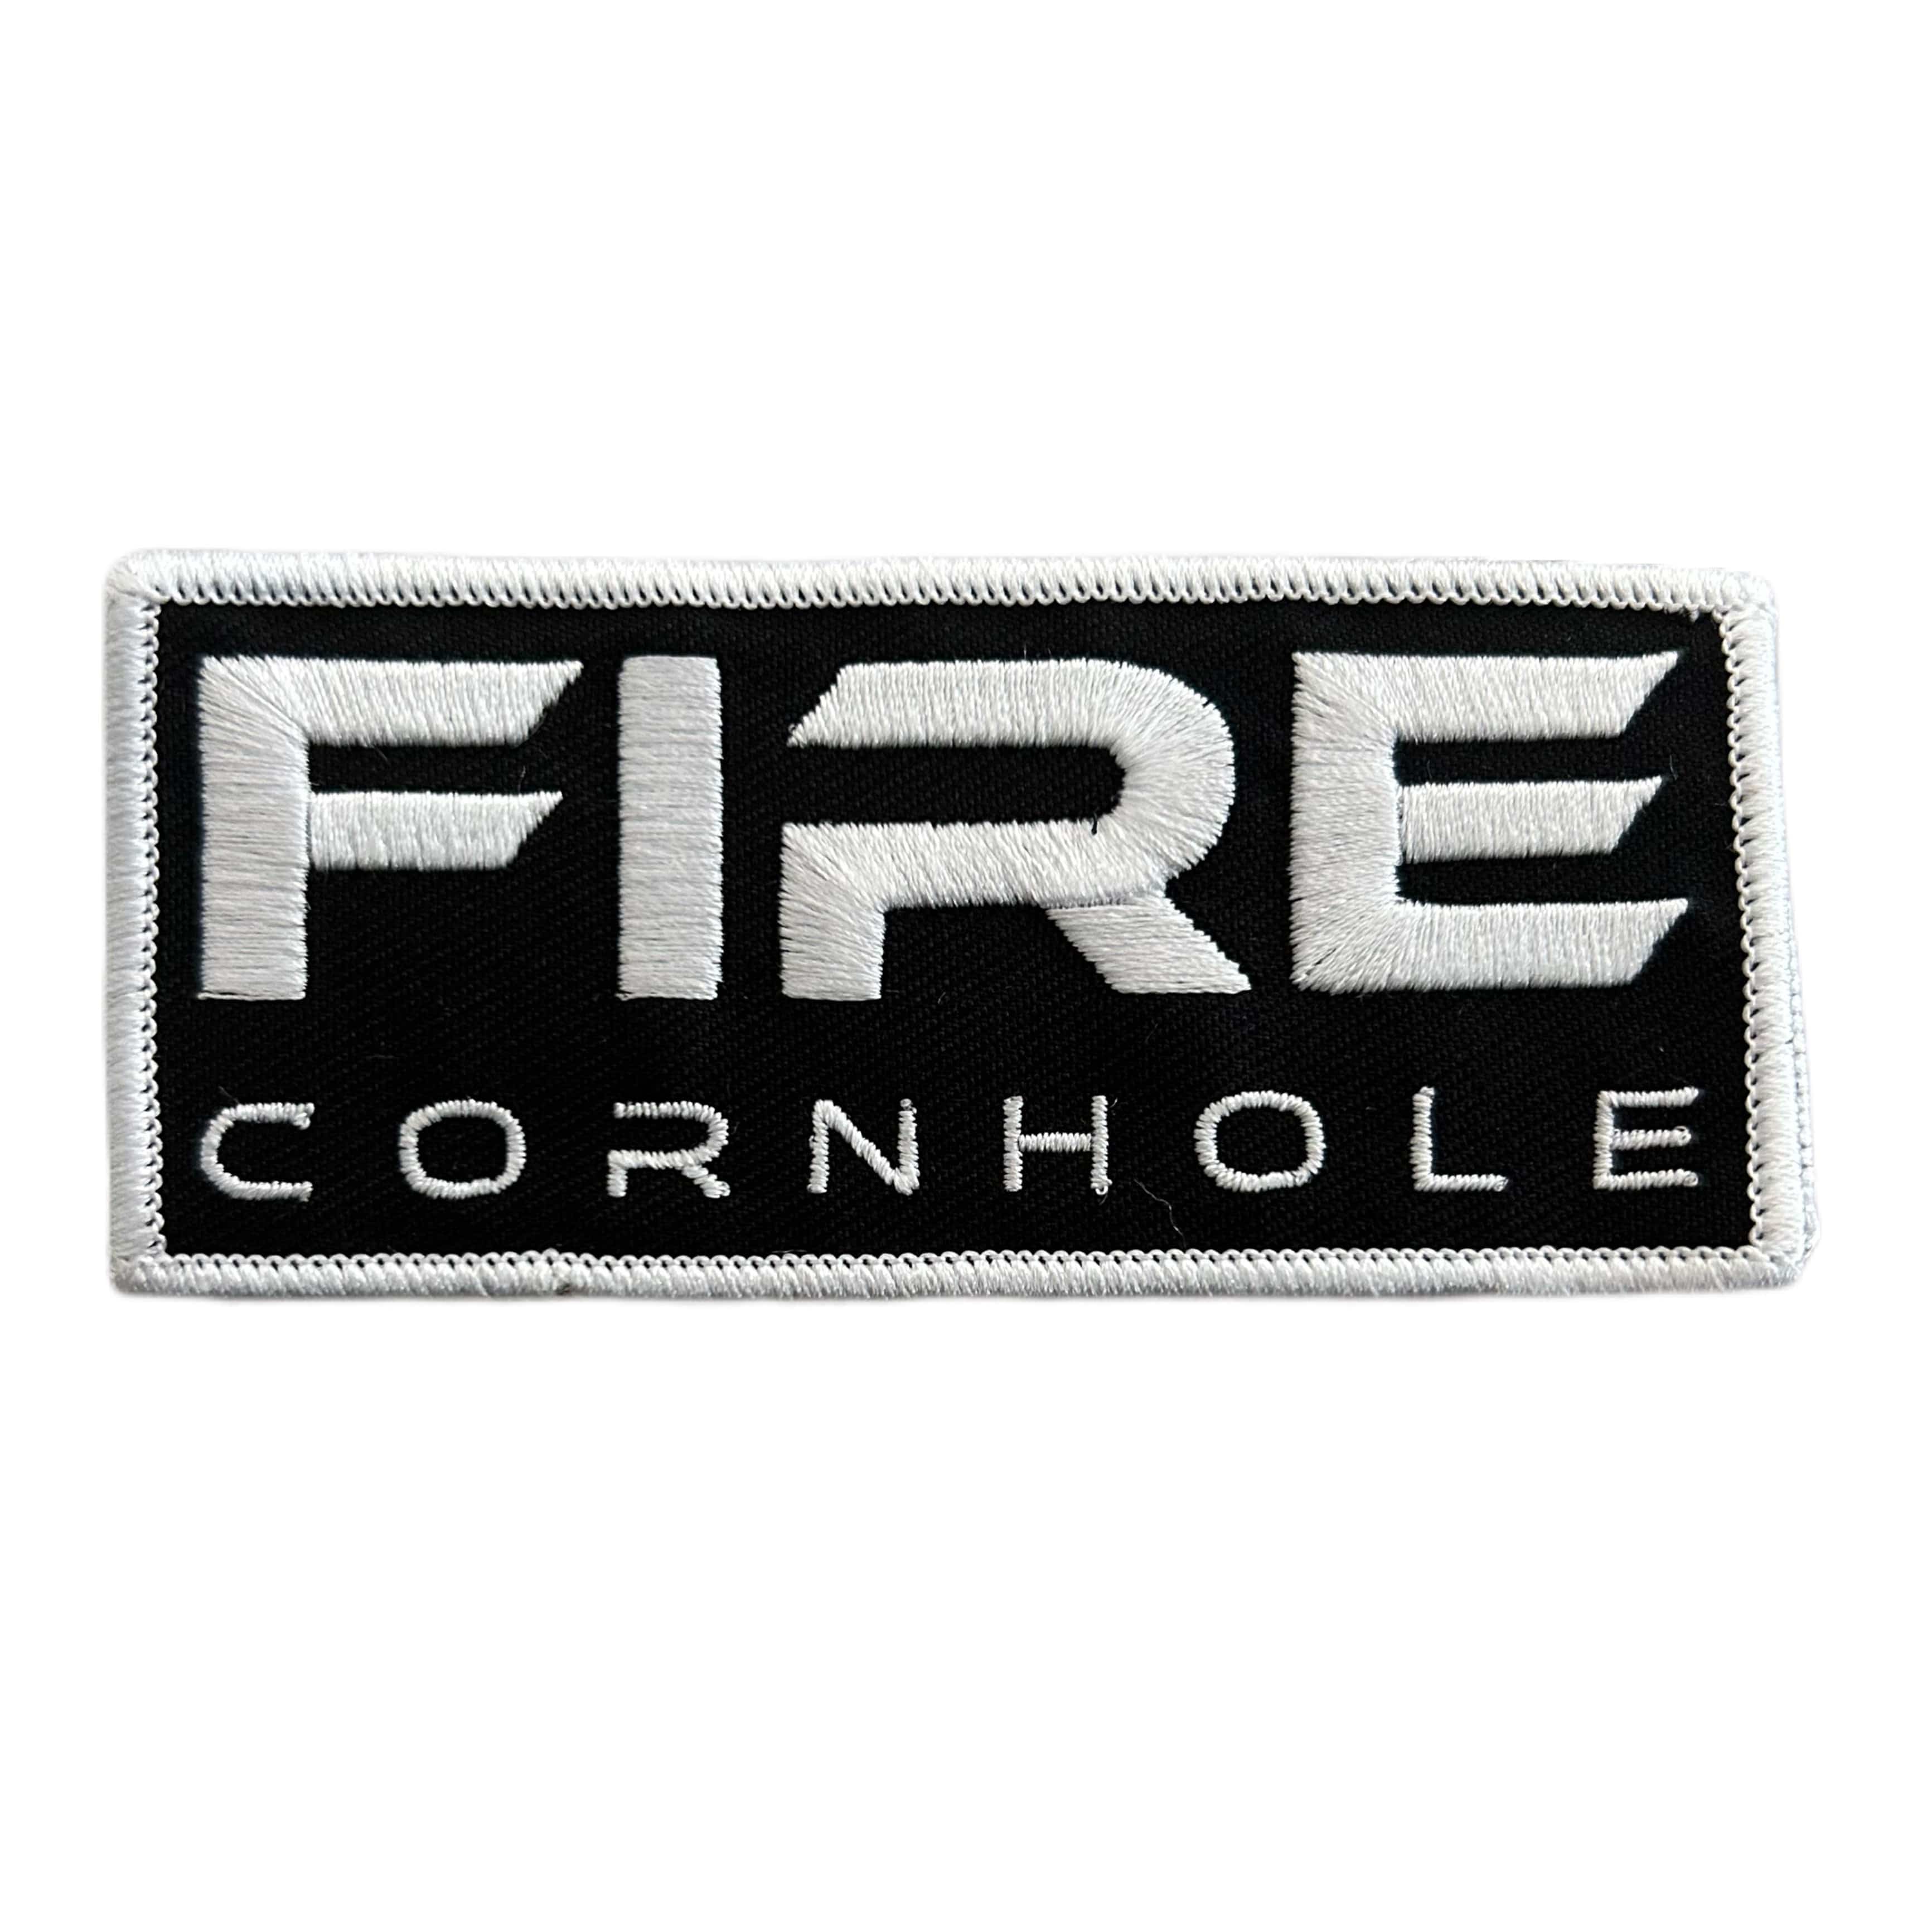 Fire Cornhole Fire Cornhole Patch 2